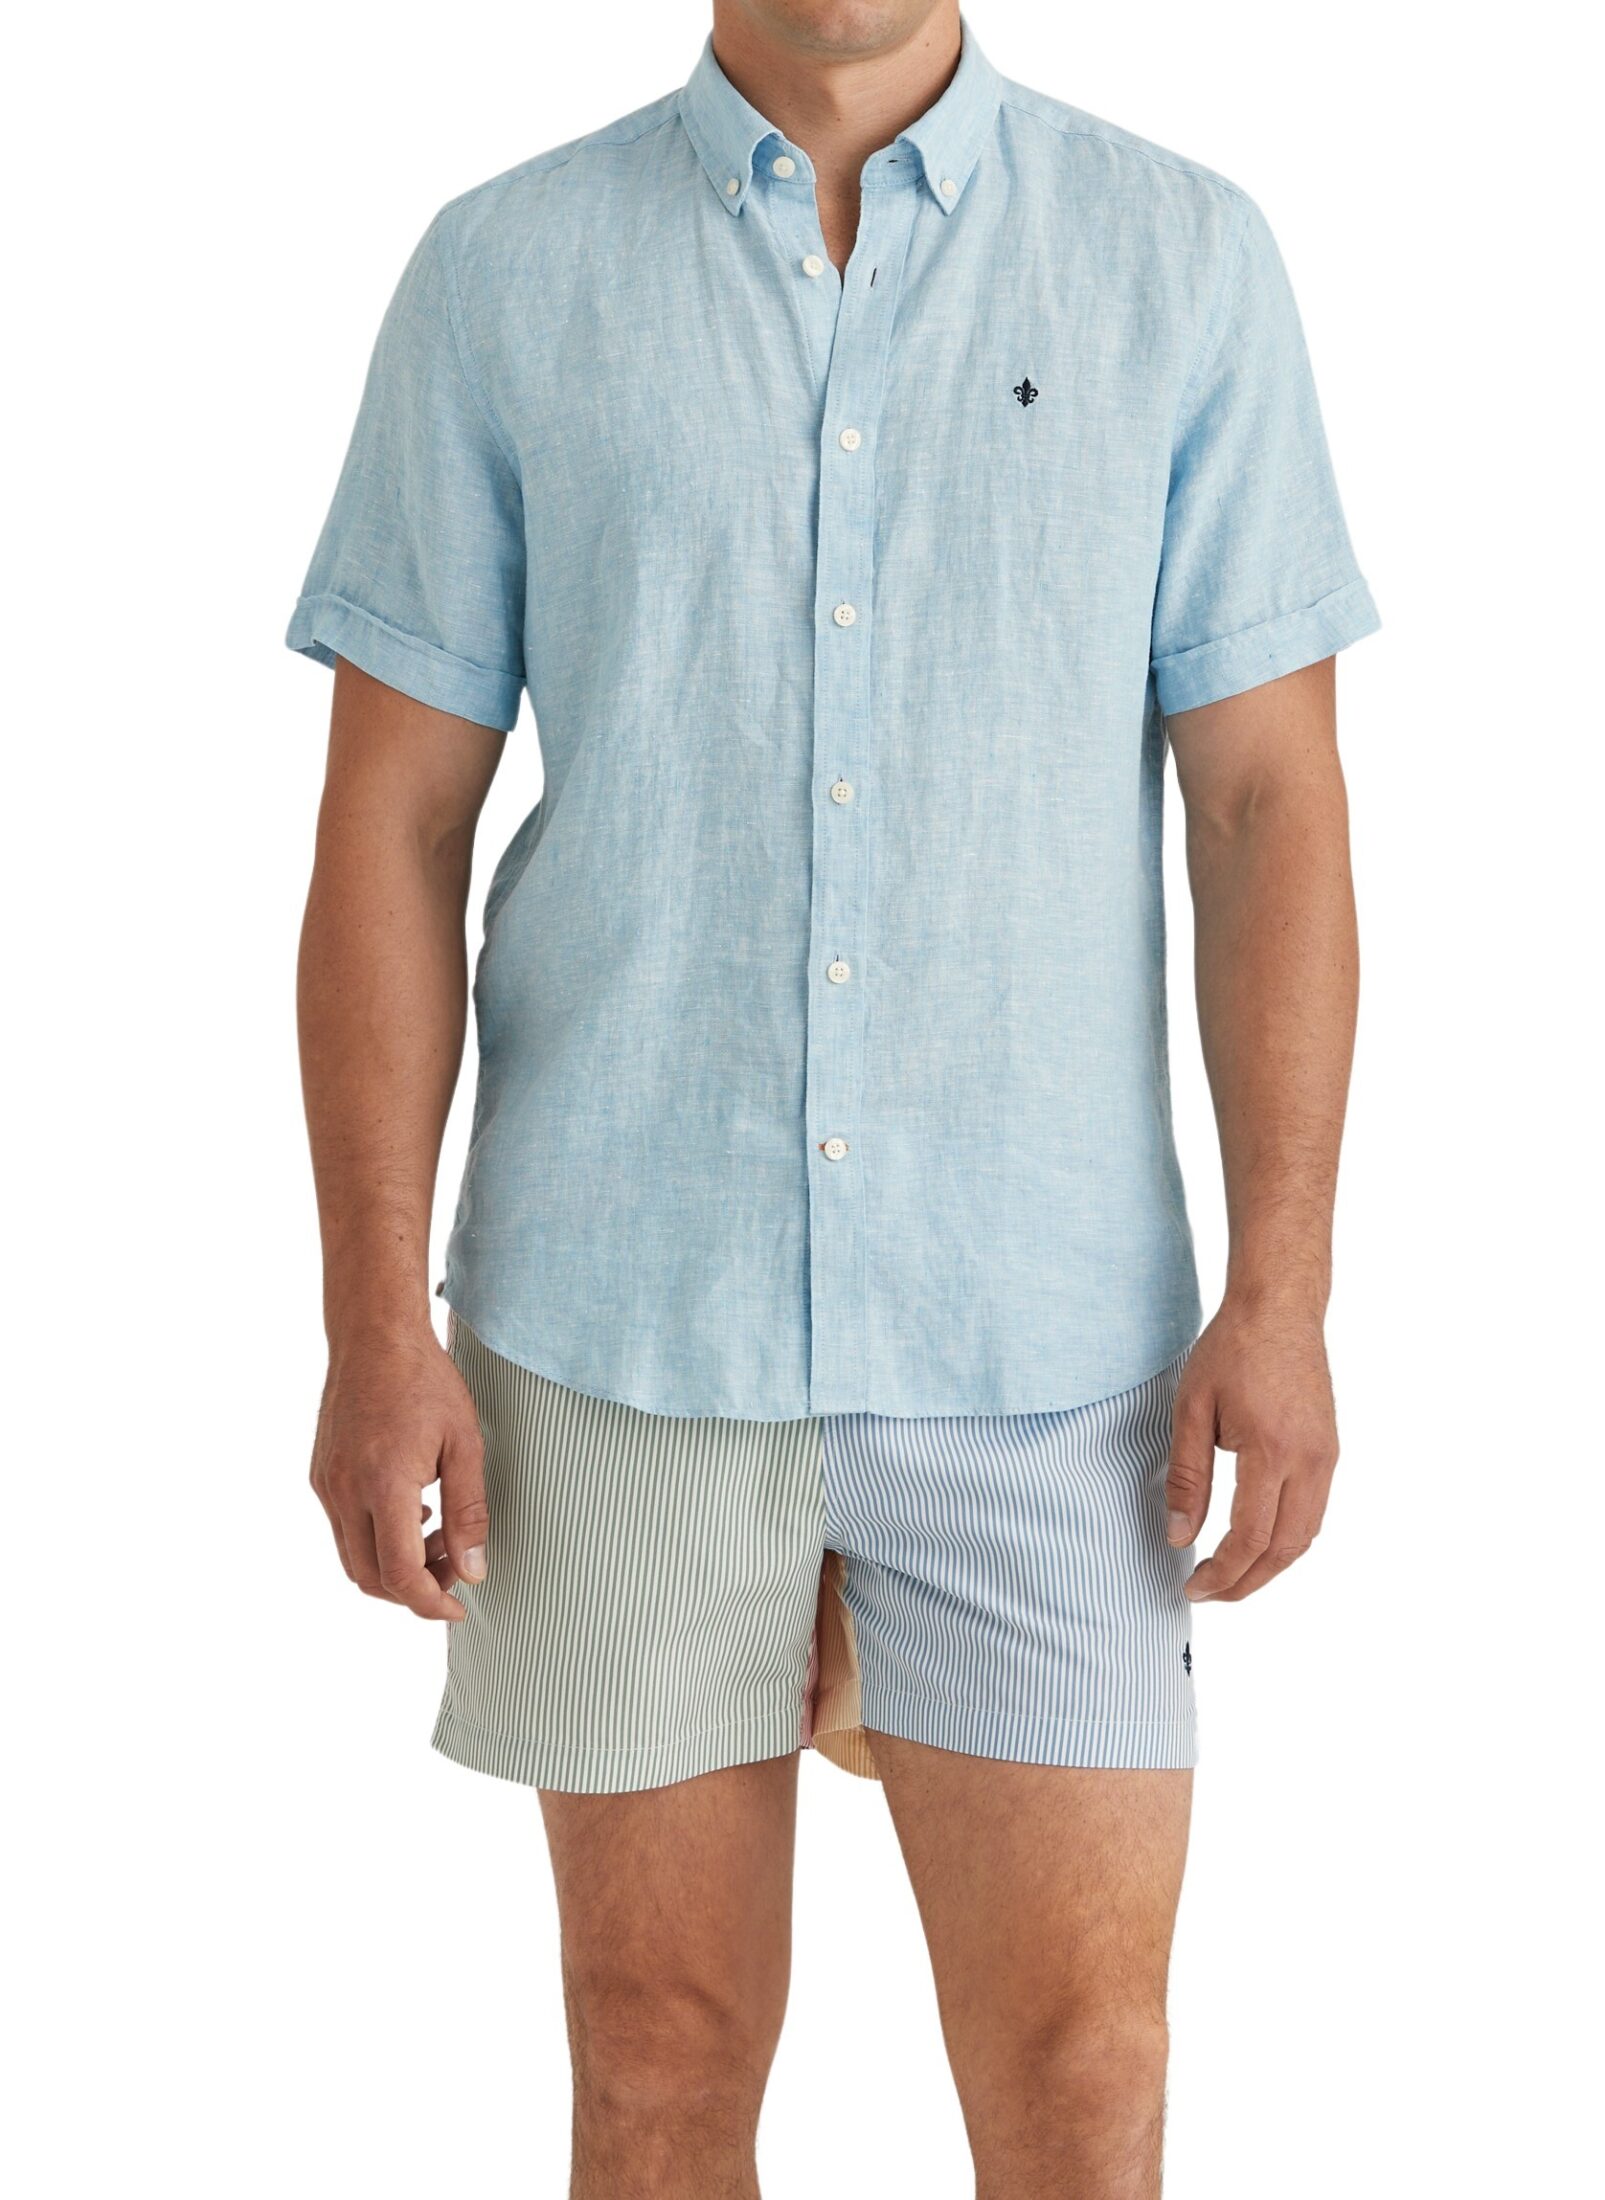 801501-douglas-linen-ss-shirt-classic-fit-56-blue-1